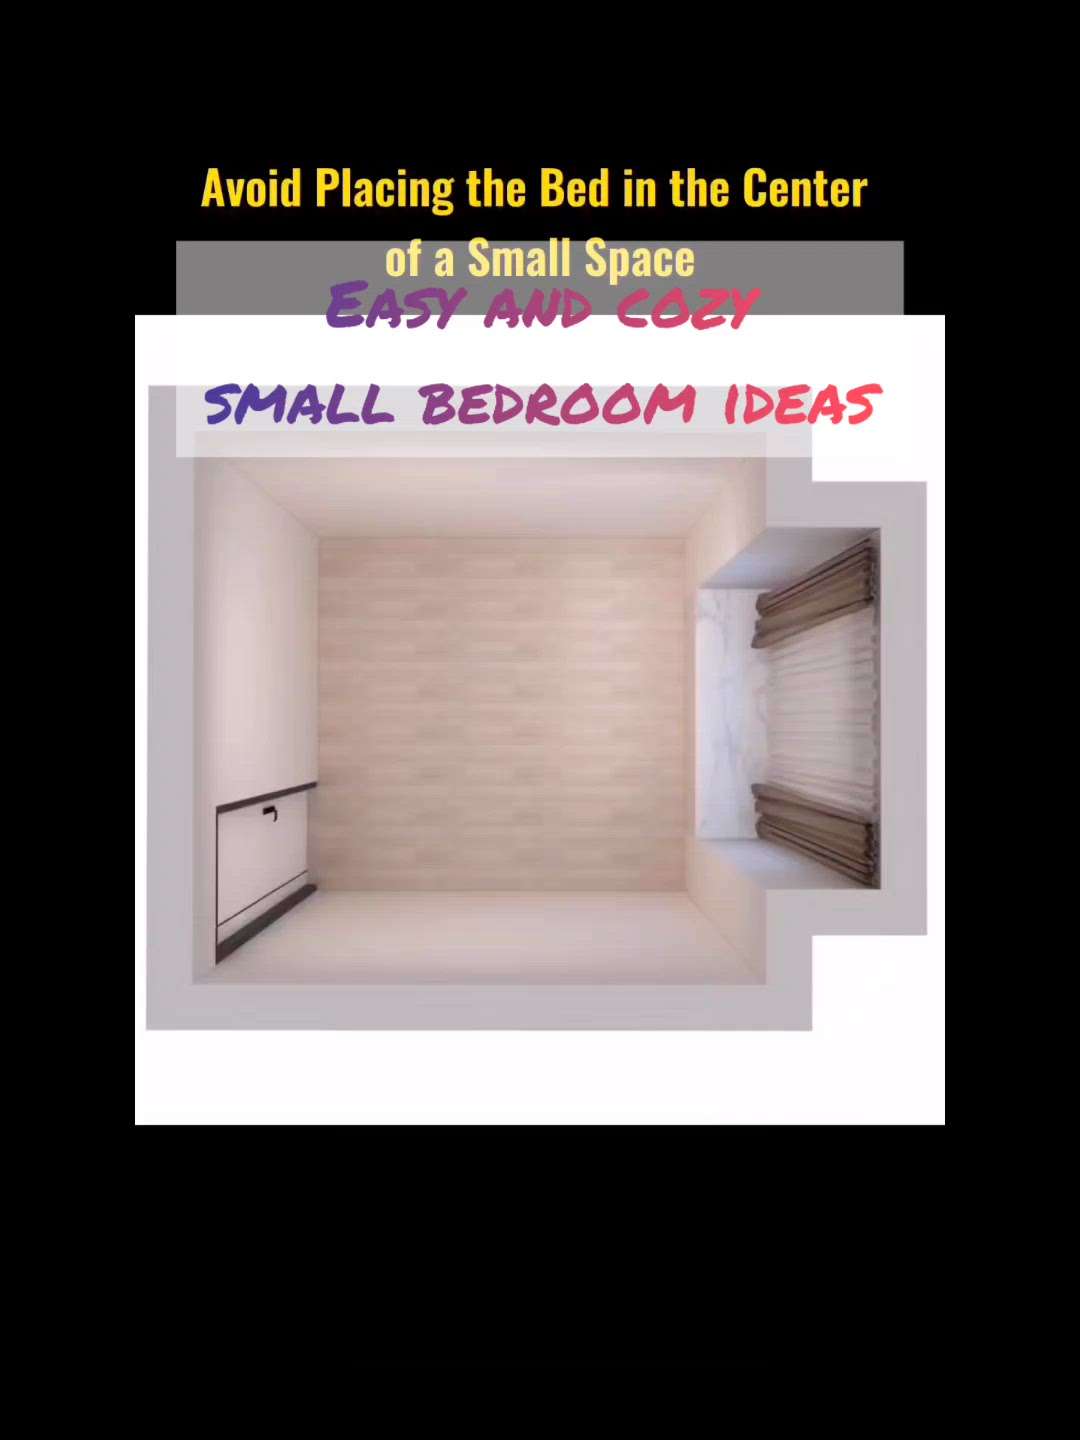 #creatorsofkolo #kerala #Top3Tips
#smallbedroomideas #bedroomrenovation #BedroomDecor #modernhouse #KidsRoom